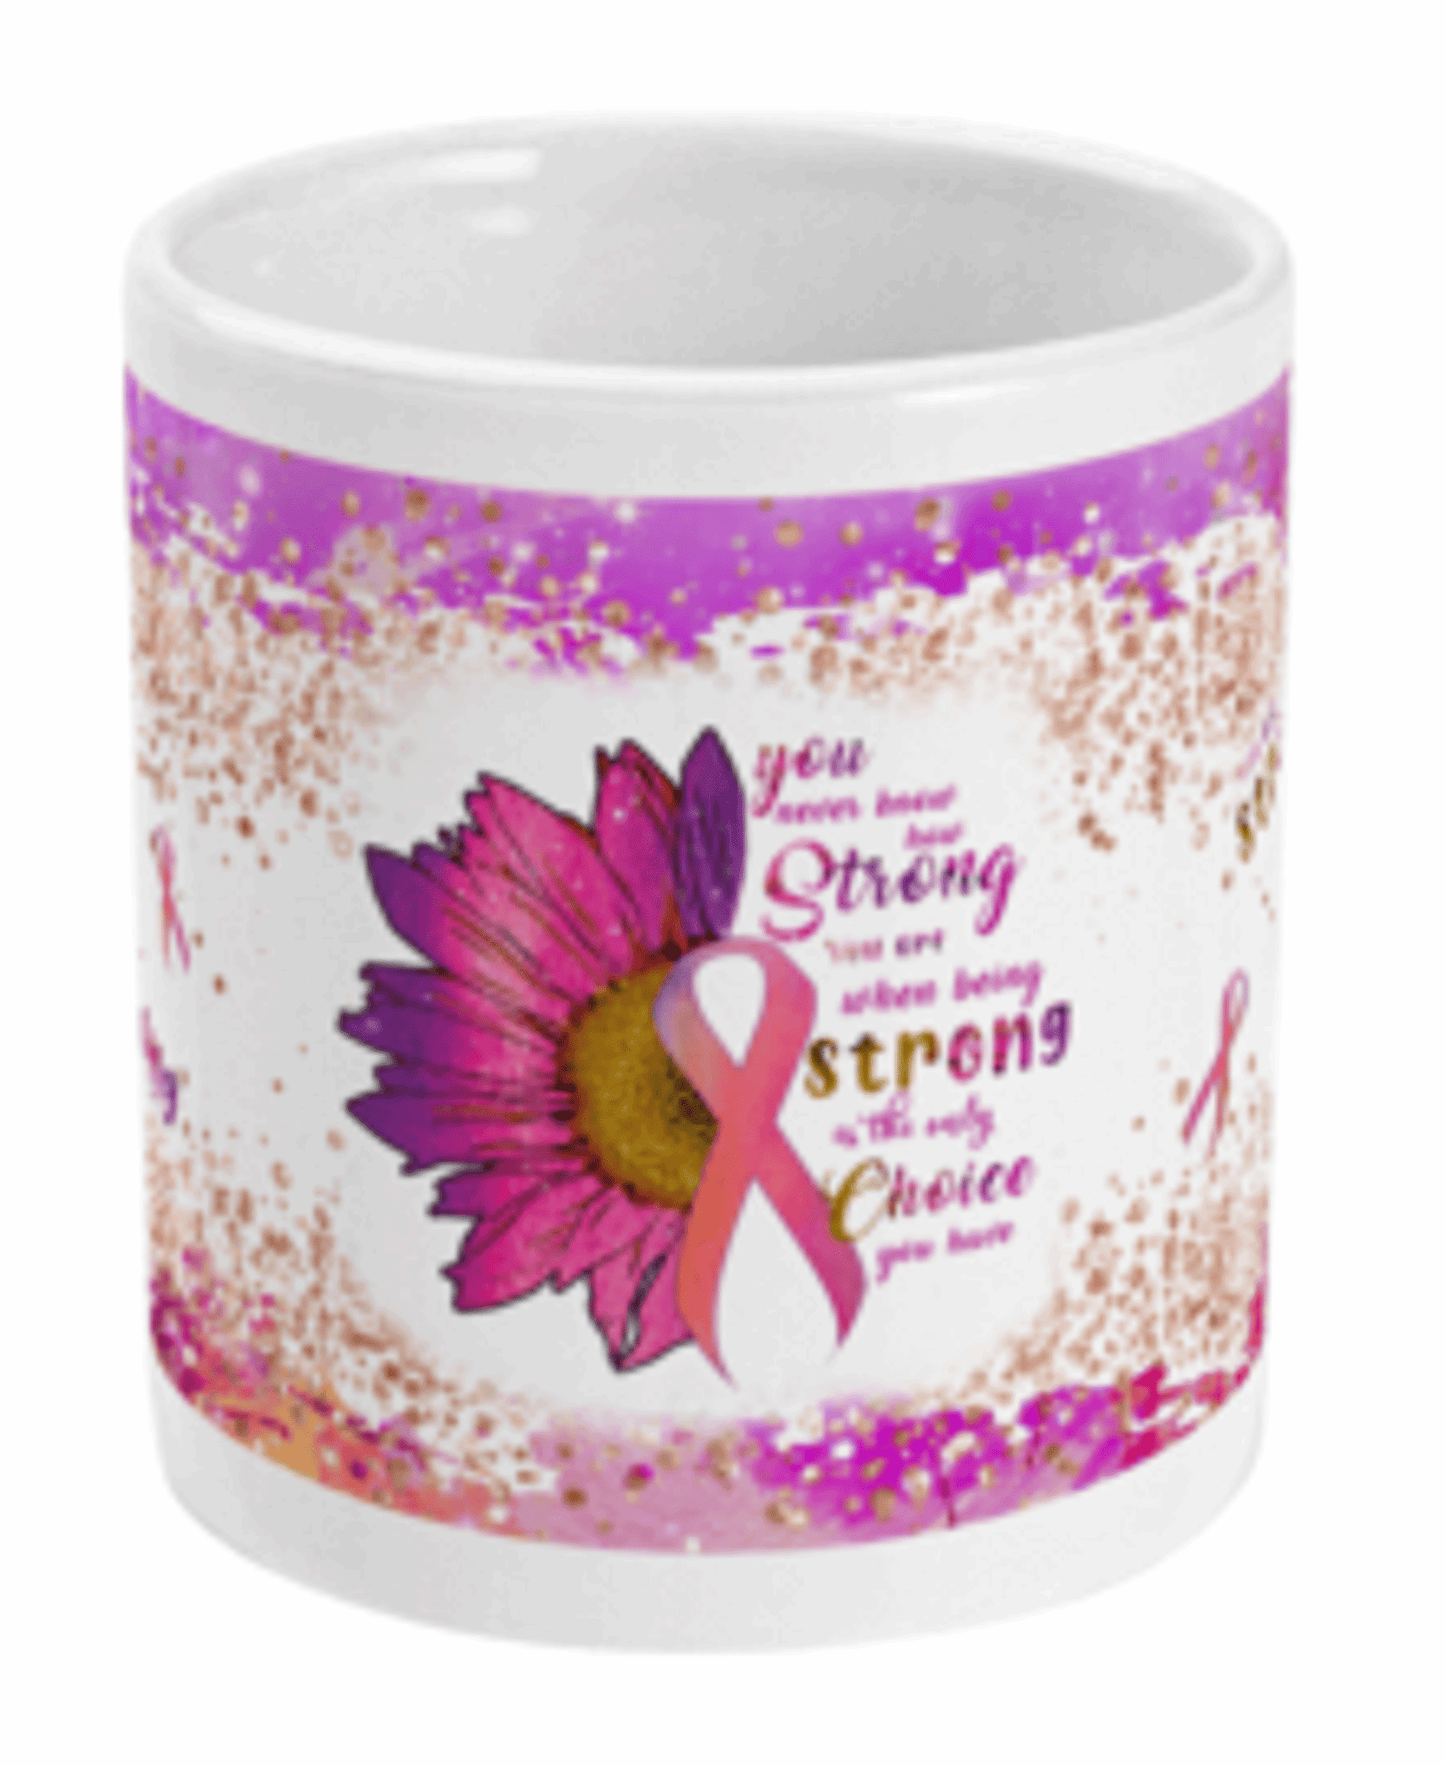  Cancer Awareness Coffee/Tea Mug by Free Spirit Accessories sold by Free Spirit Accessories